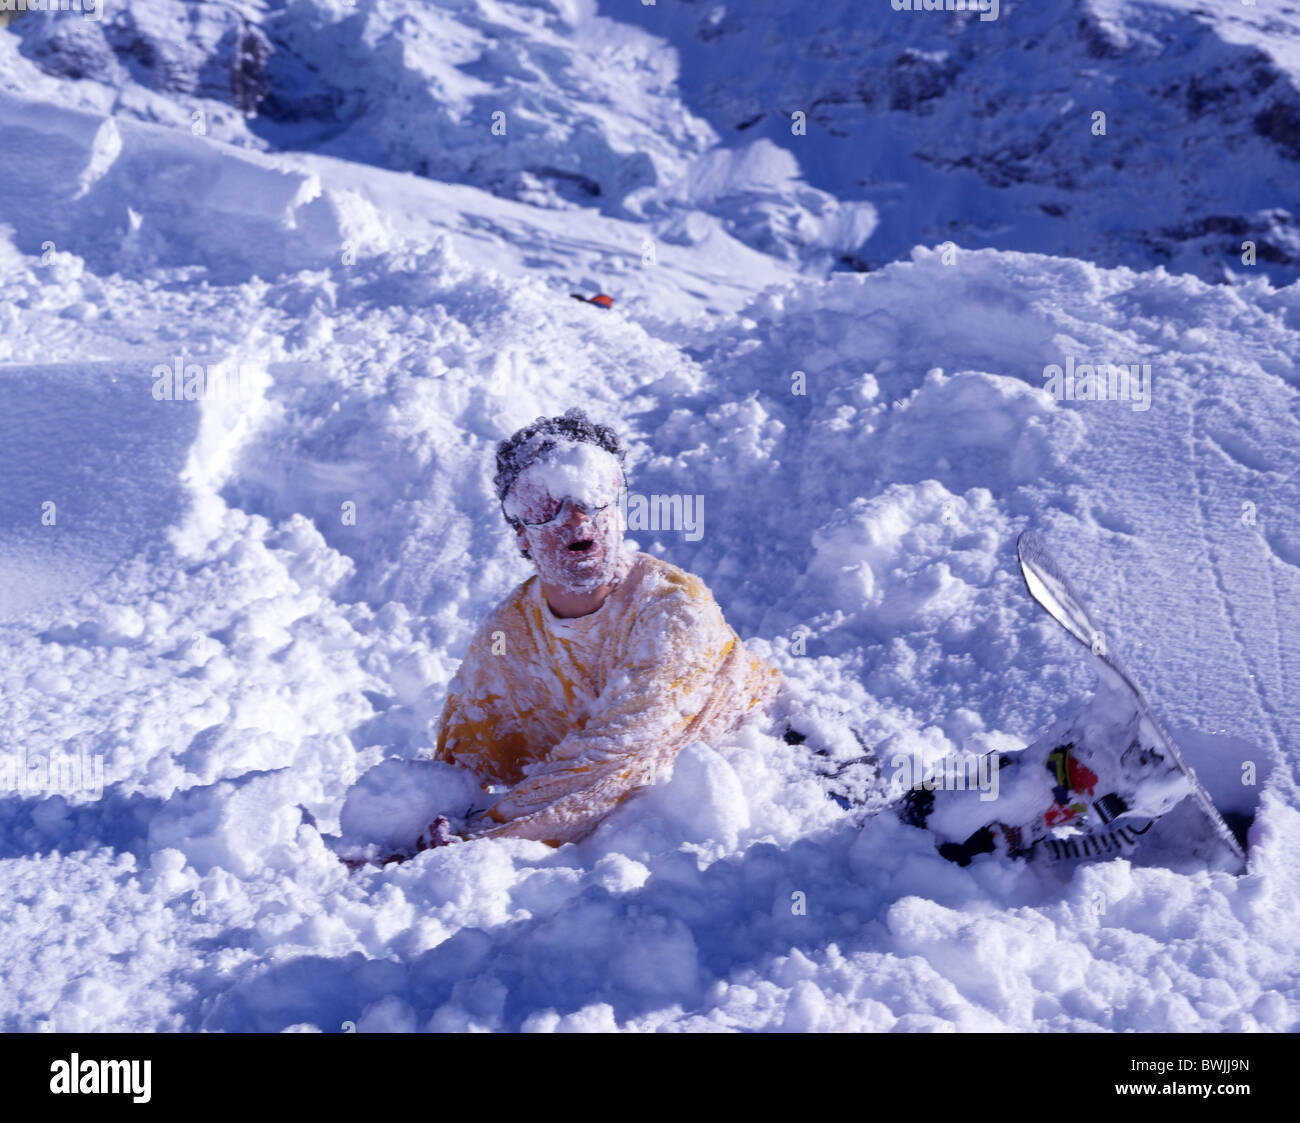 fall man overthrown snow snowboard Snowboarding Snowboarder Snowboard winter winter sports sports humor Stock Photo